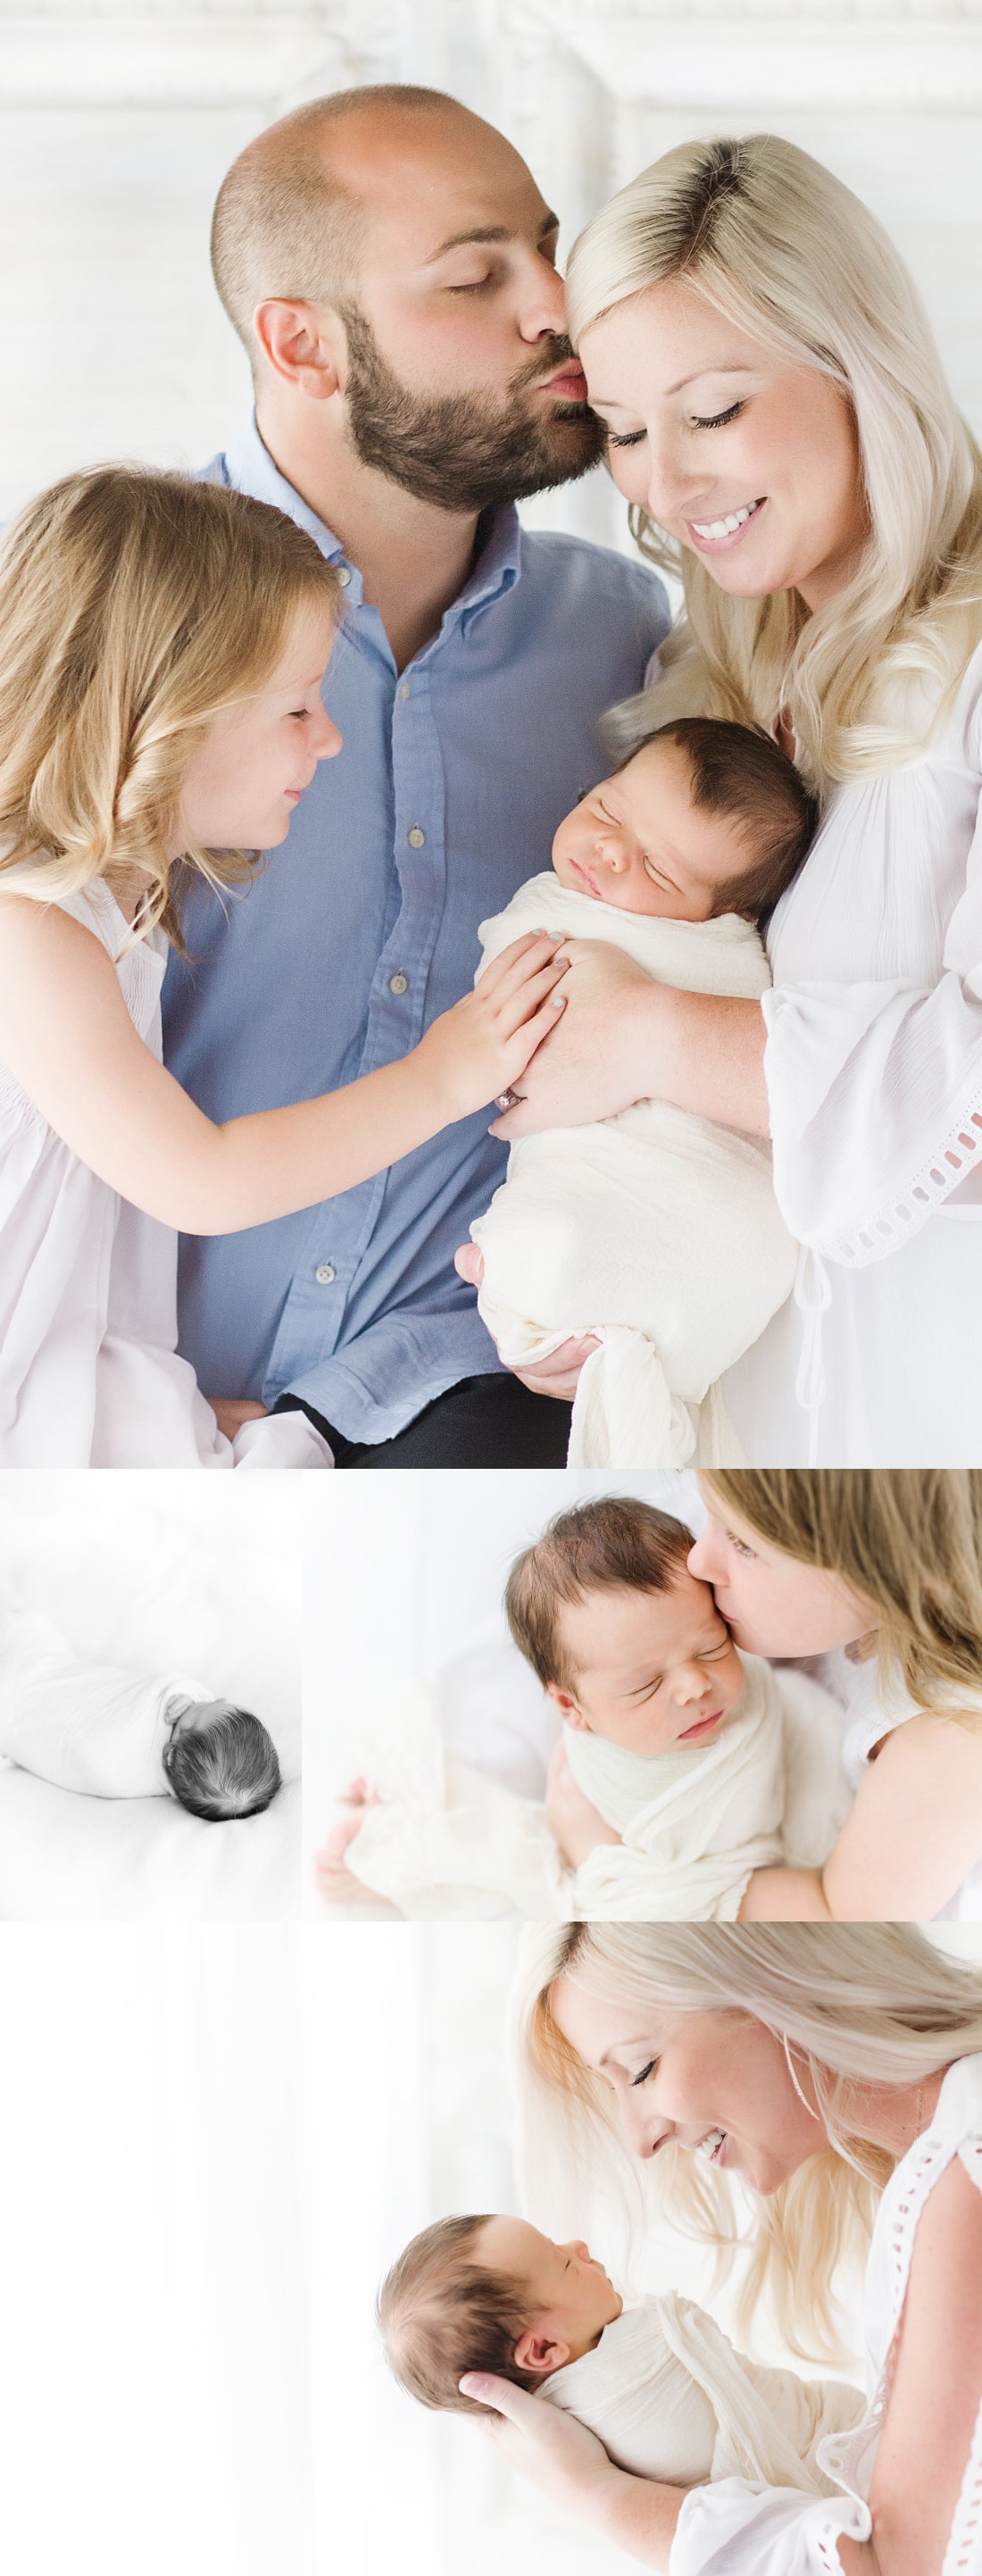  family and newborn portrait with dad kissing mom's forehead savannah ga newborn baby photographer